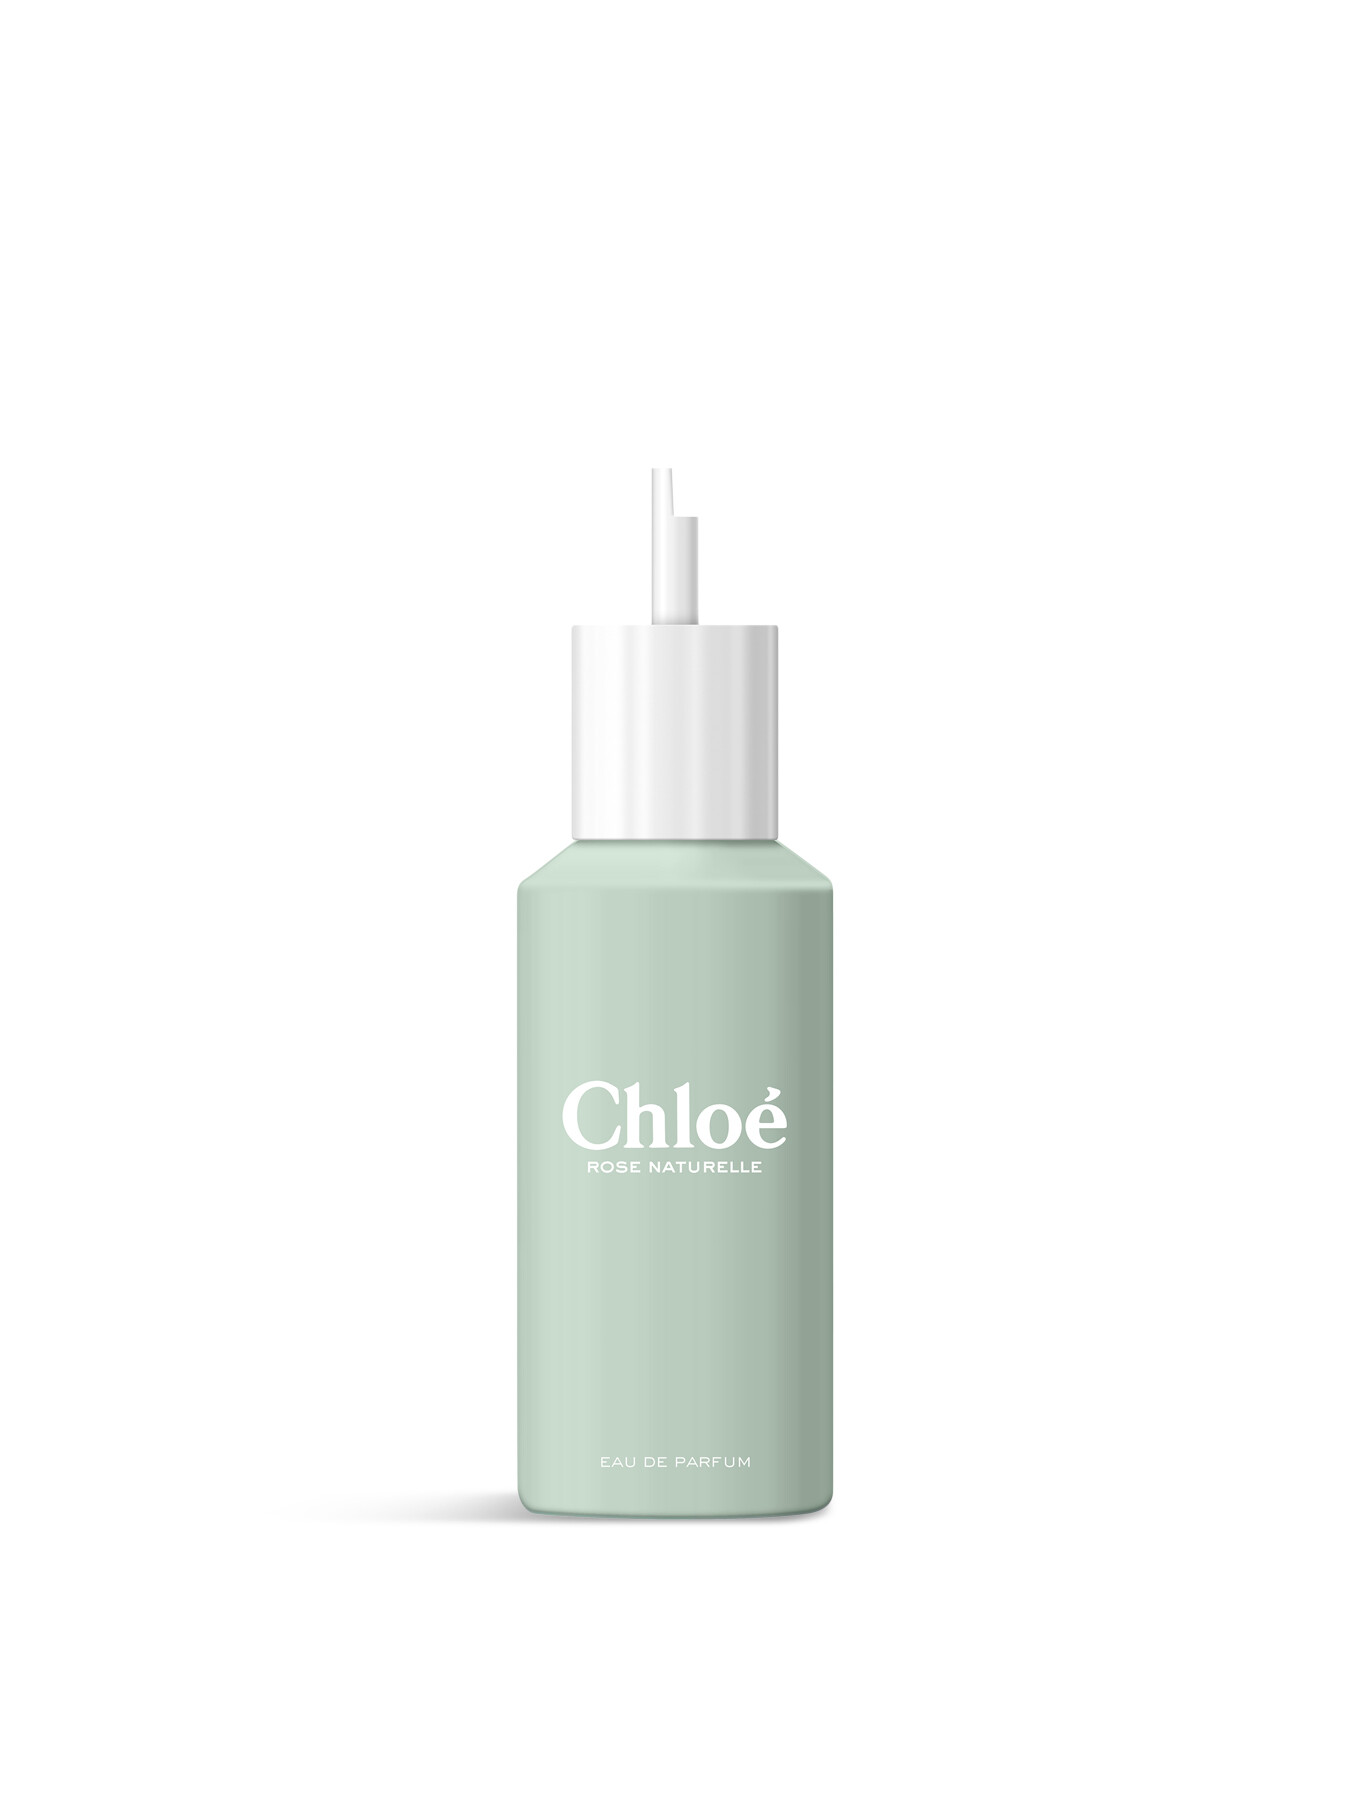 Chloé Signature Naturelle Edp 150ml Refill In White